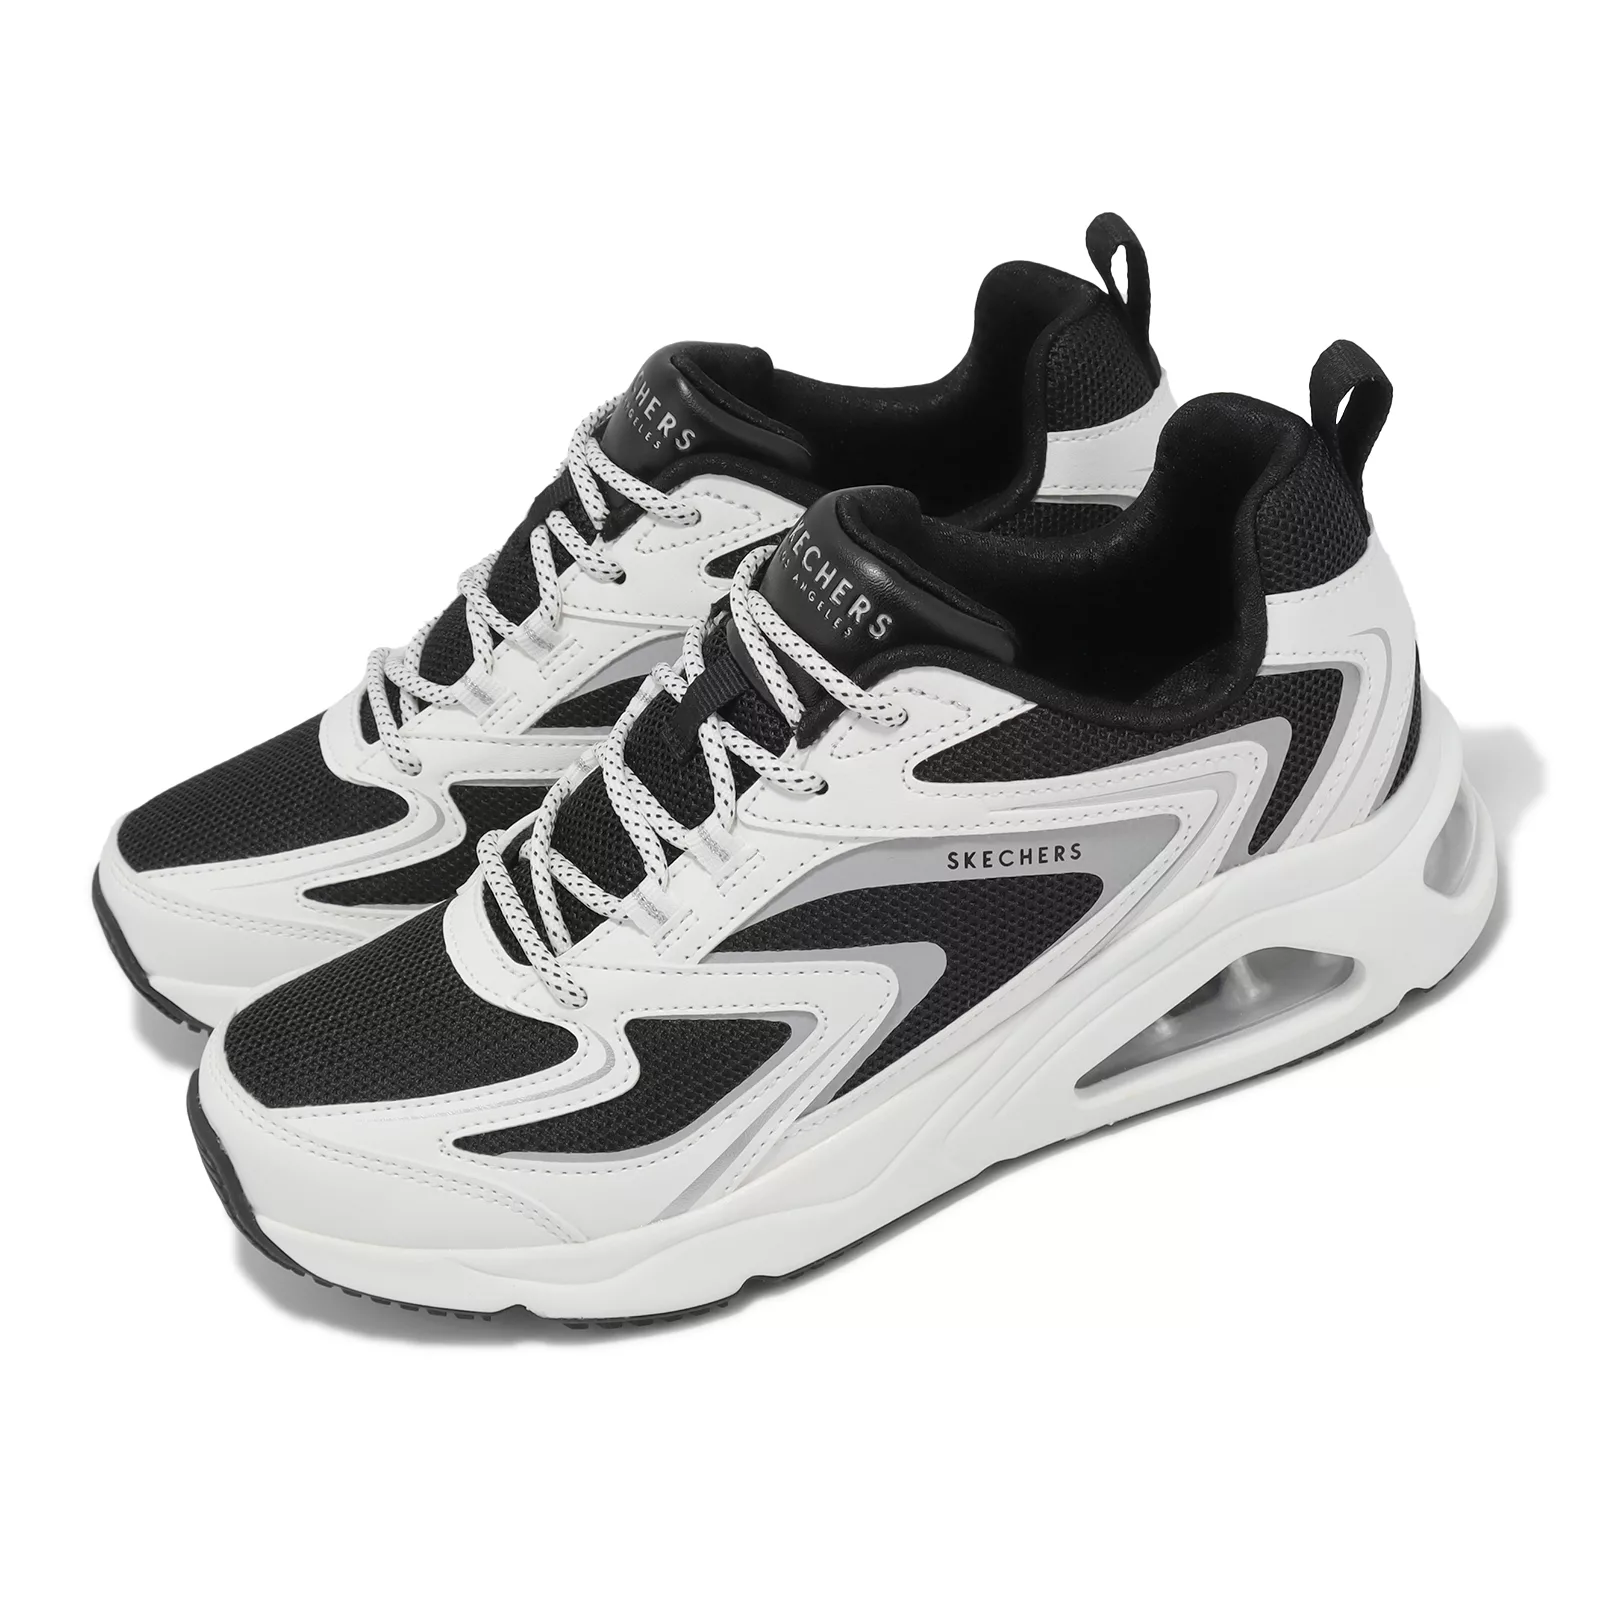 Skechers 休閒鞋 Tres-Air Uno 女鞋 白 黑 避震 透氣 氣墊 記憶鞋墊 厚底 運動鞋 177424WBK